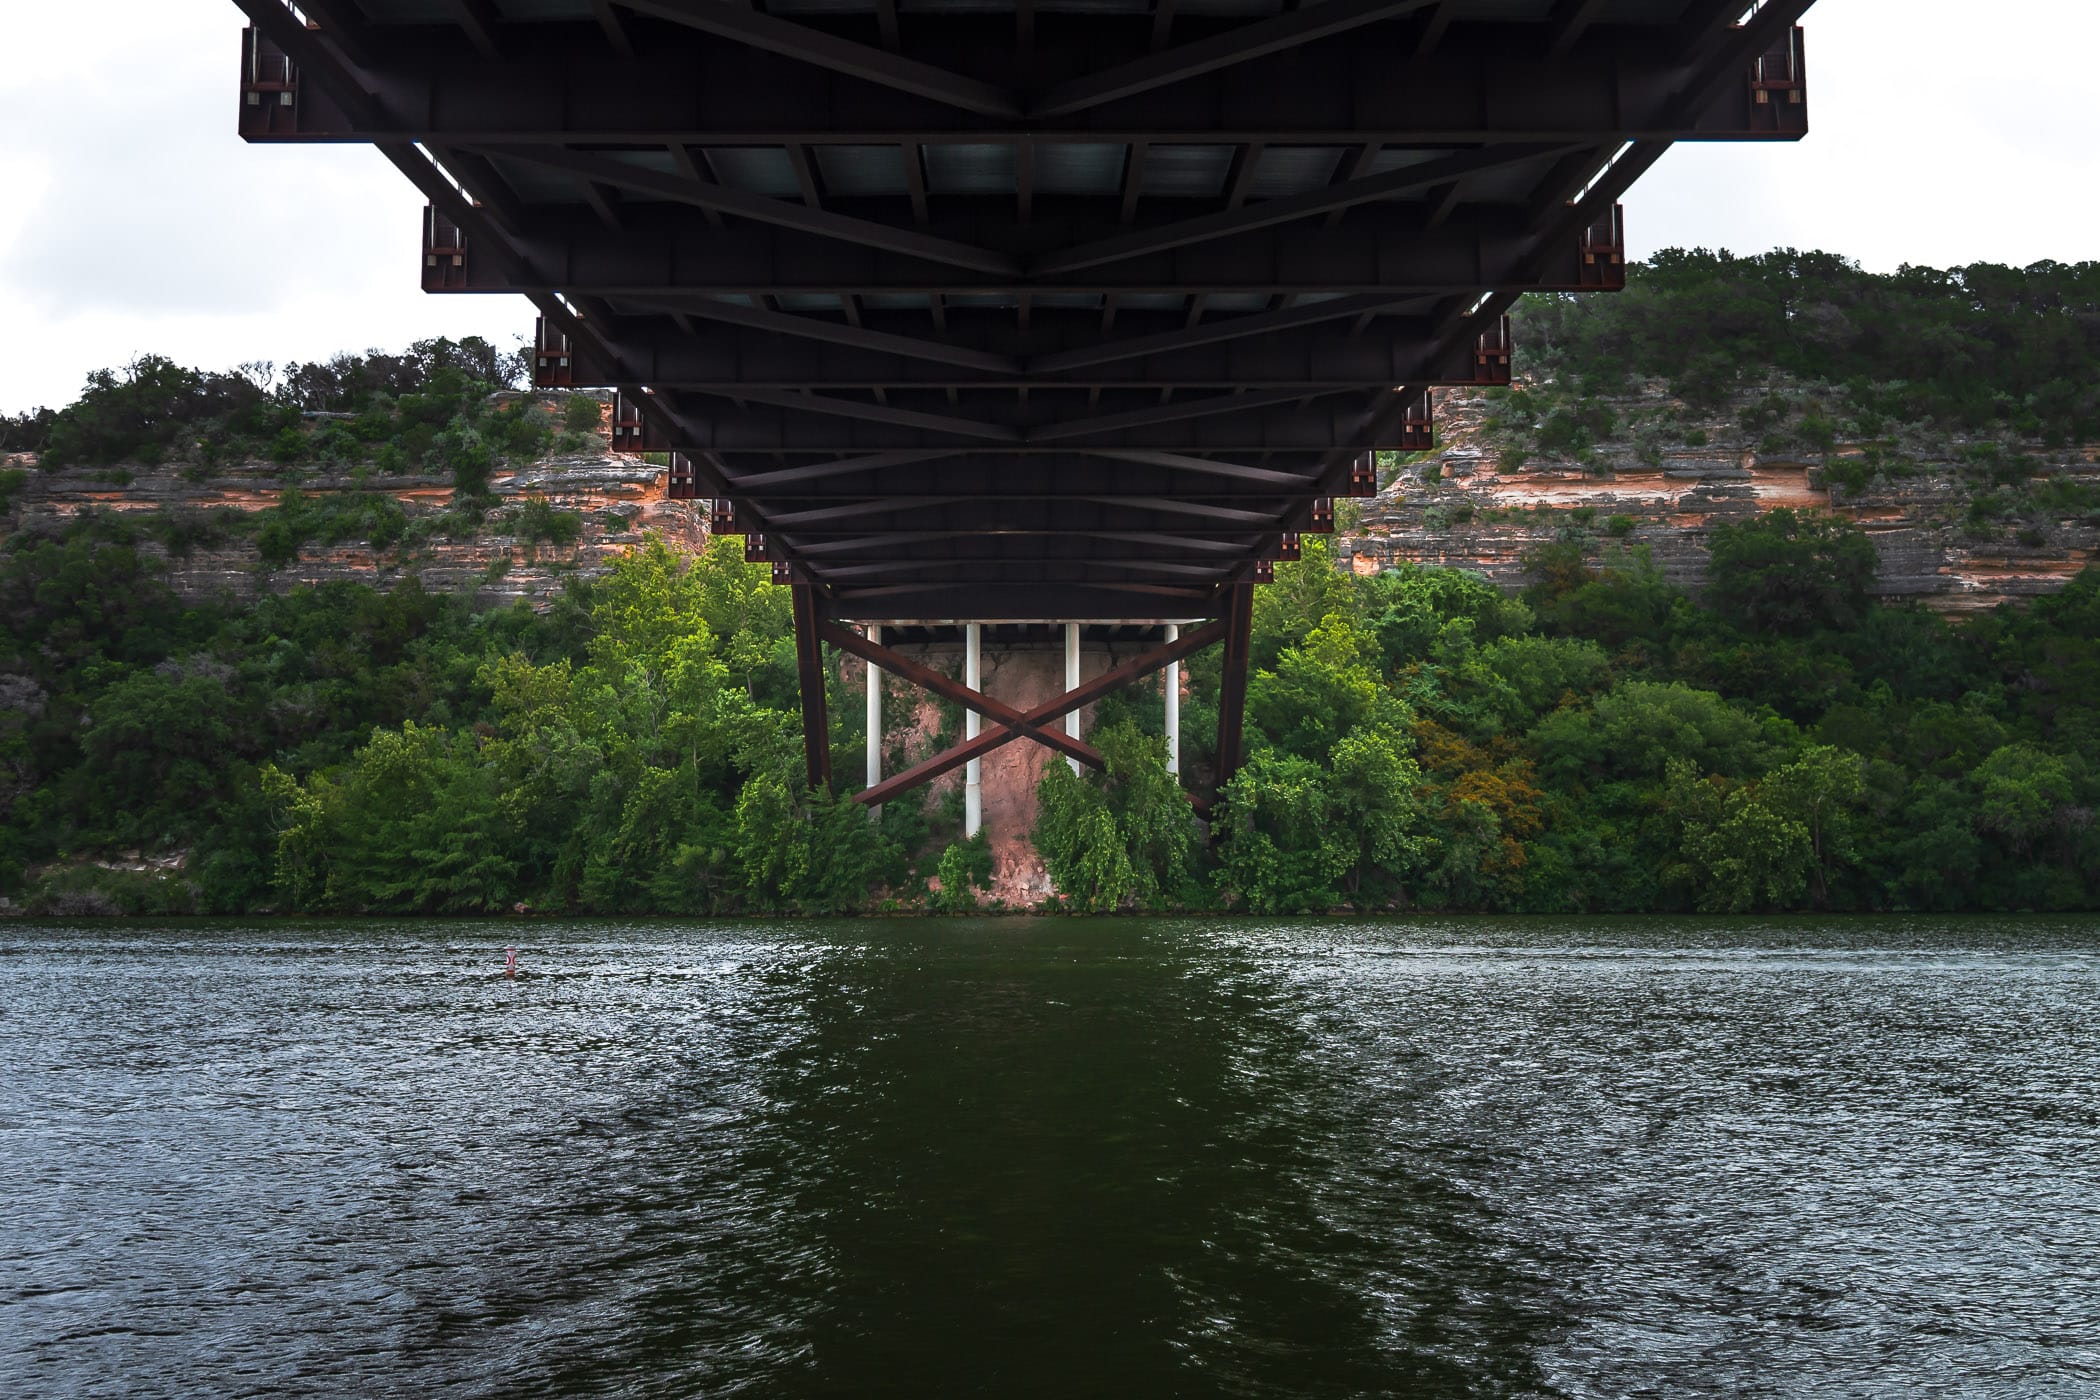 Pennybacker Bridge spans Lake Austin, connecting sections of Texas' Loop 360 Highway.